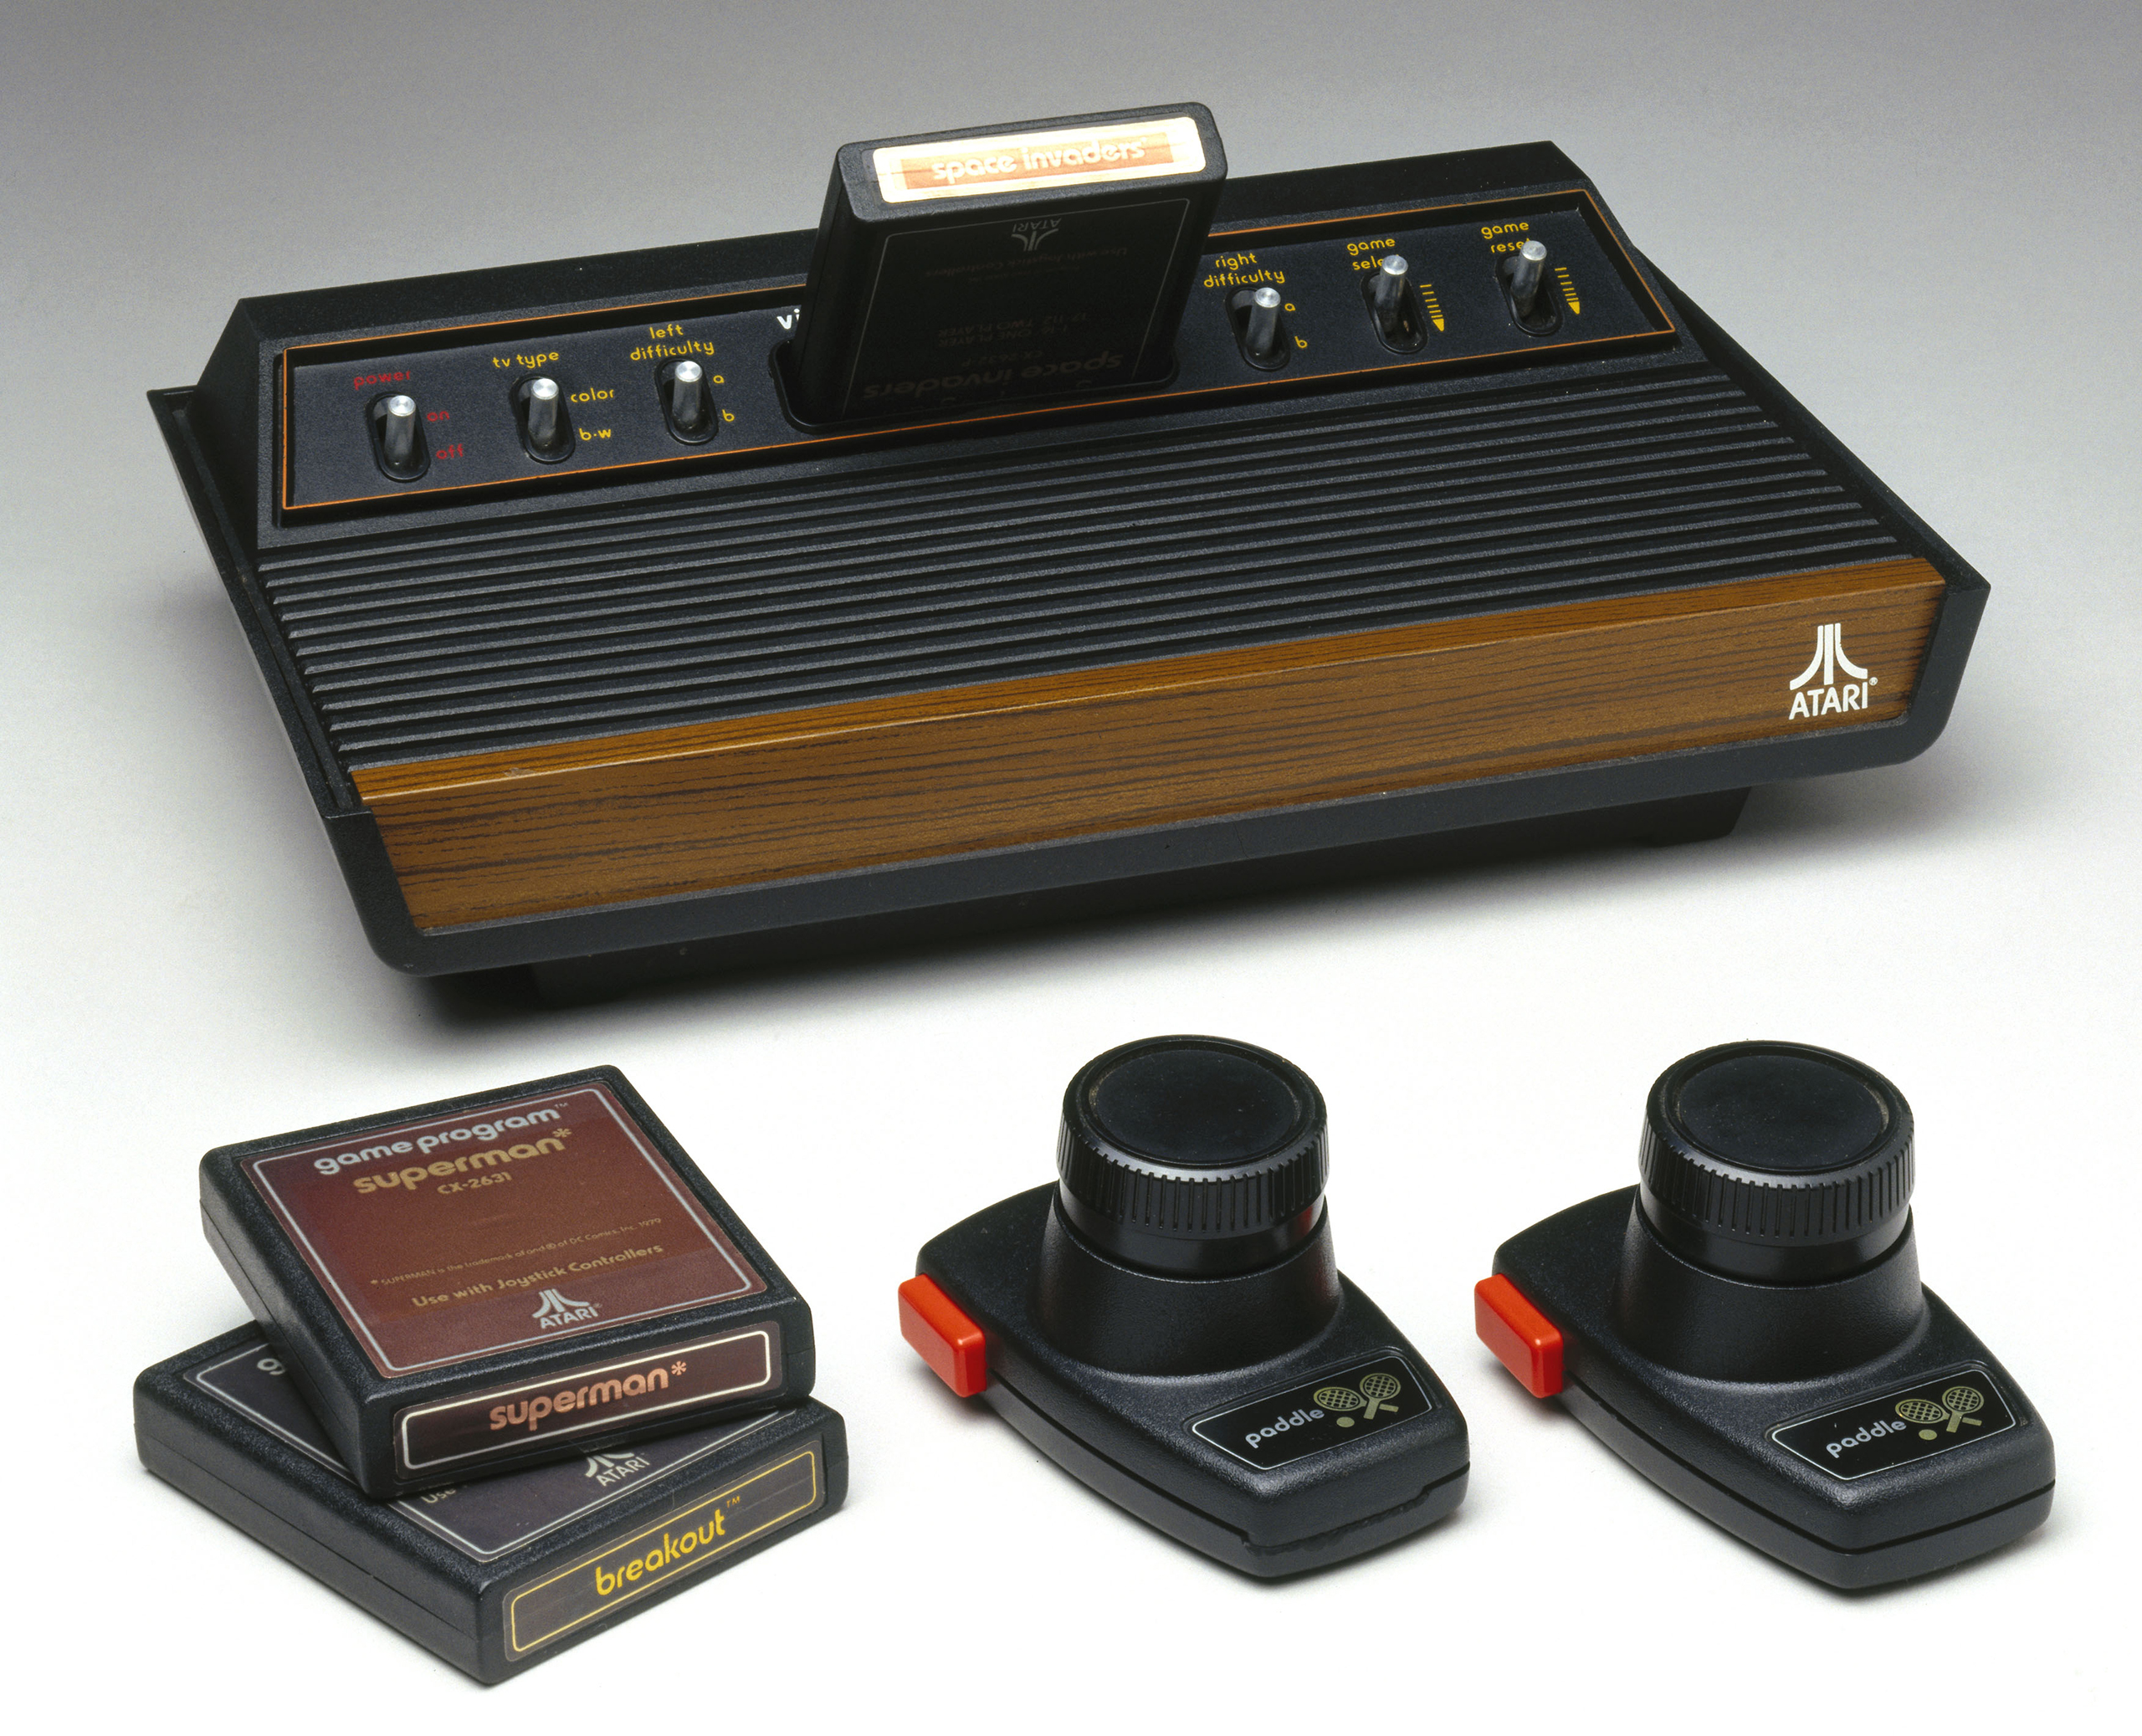 Atari computer console and games, c 1977.